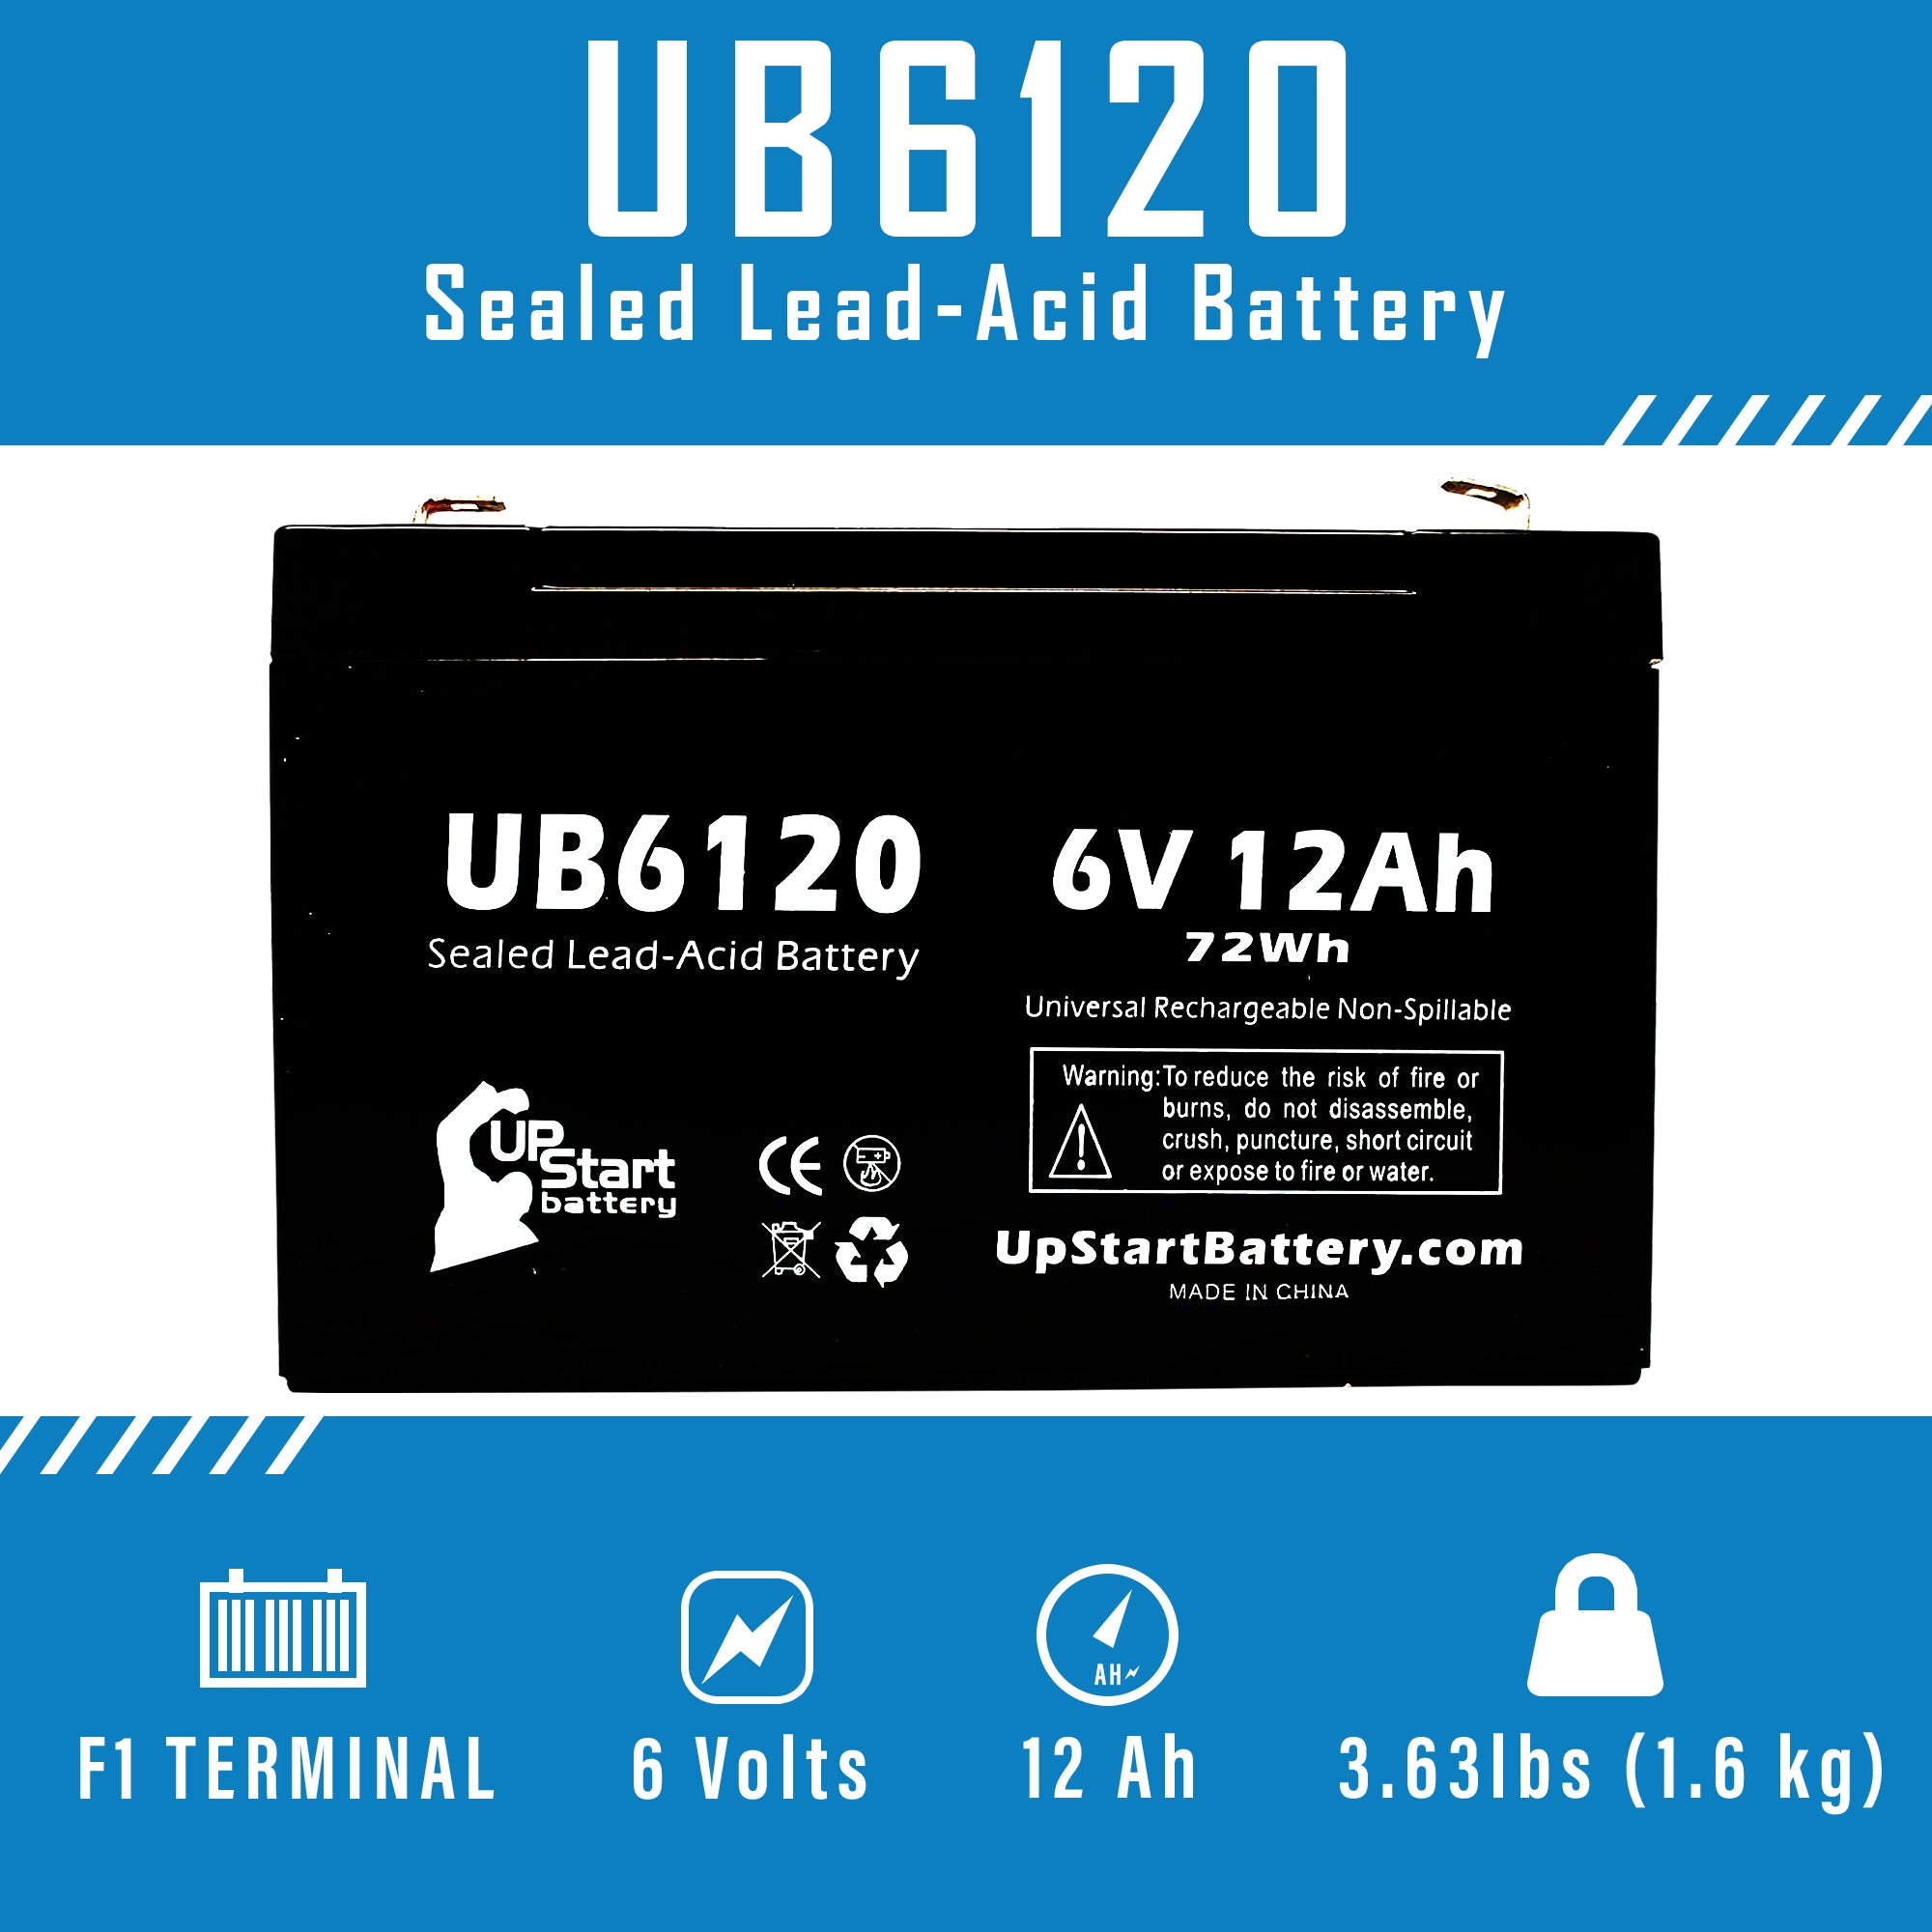 DJW6-12 Leoch Battery Replacement SLA Battery 6V 12AH F1